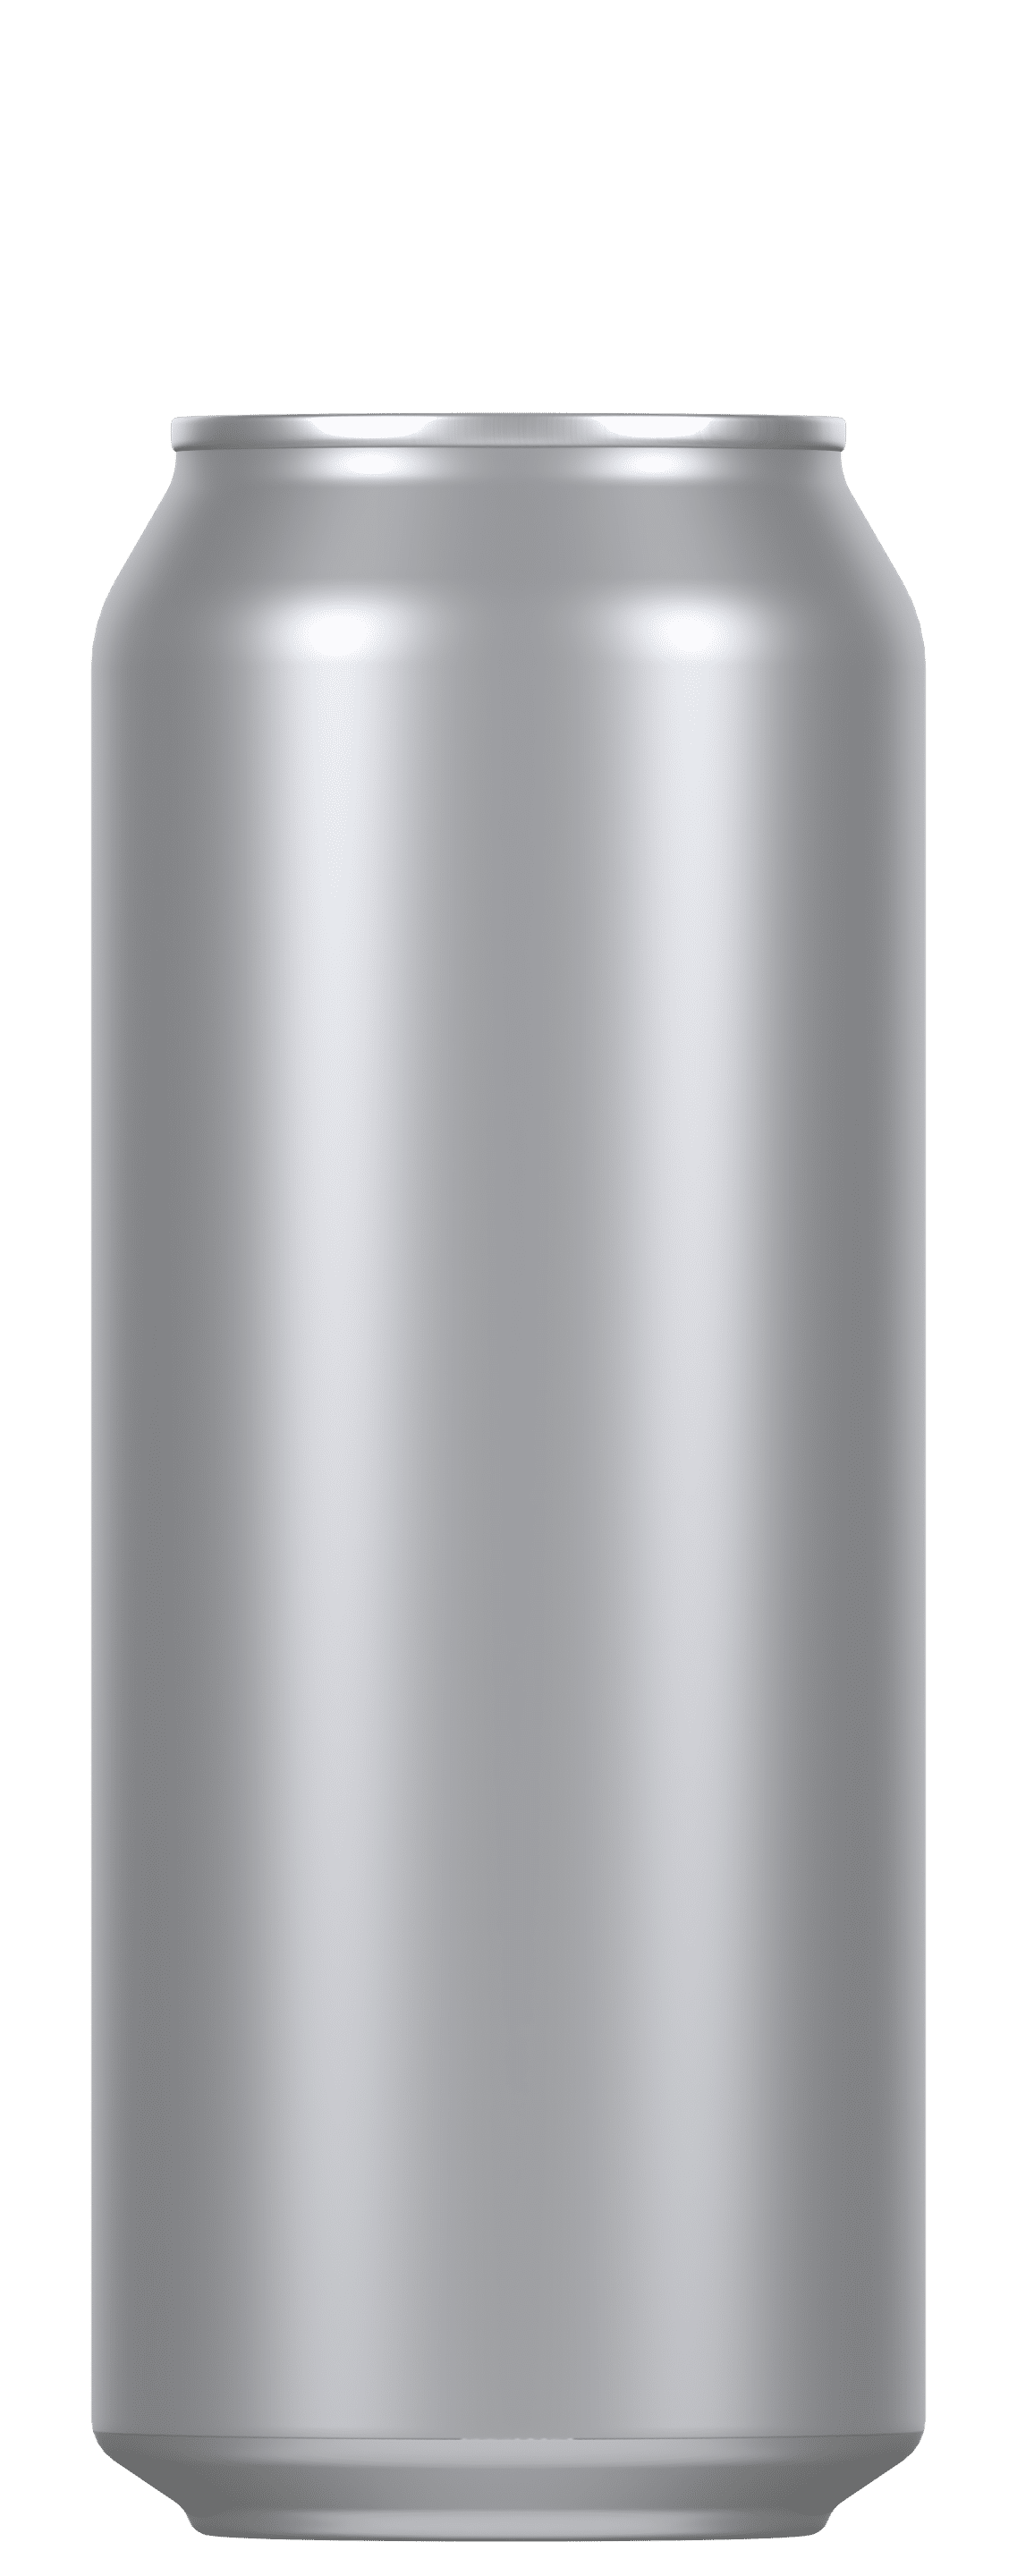 Aluminiumsdåse til øl 500 ml, sølv